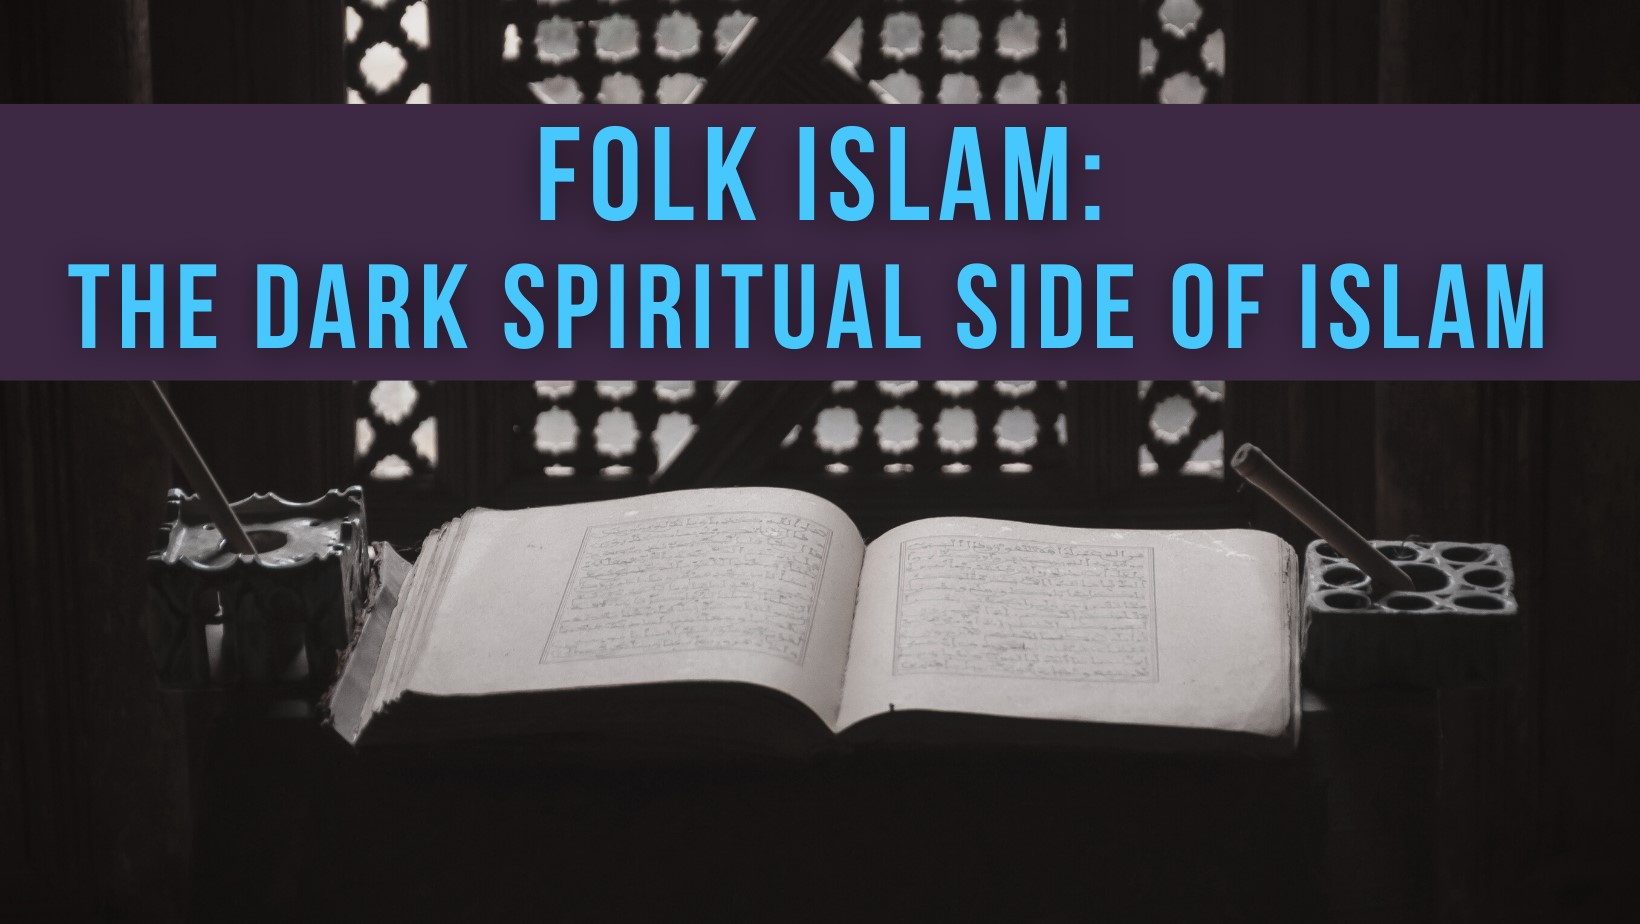 Folk Islam: The dark spiritual side of Islam